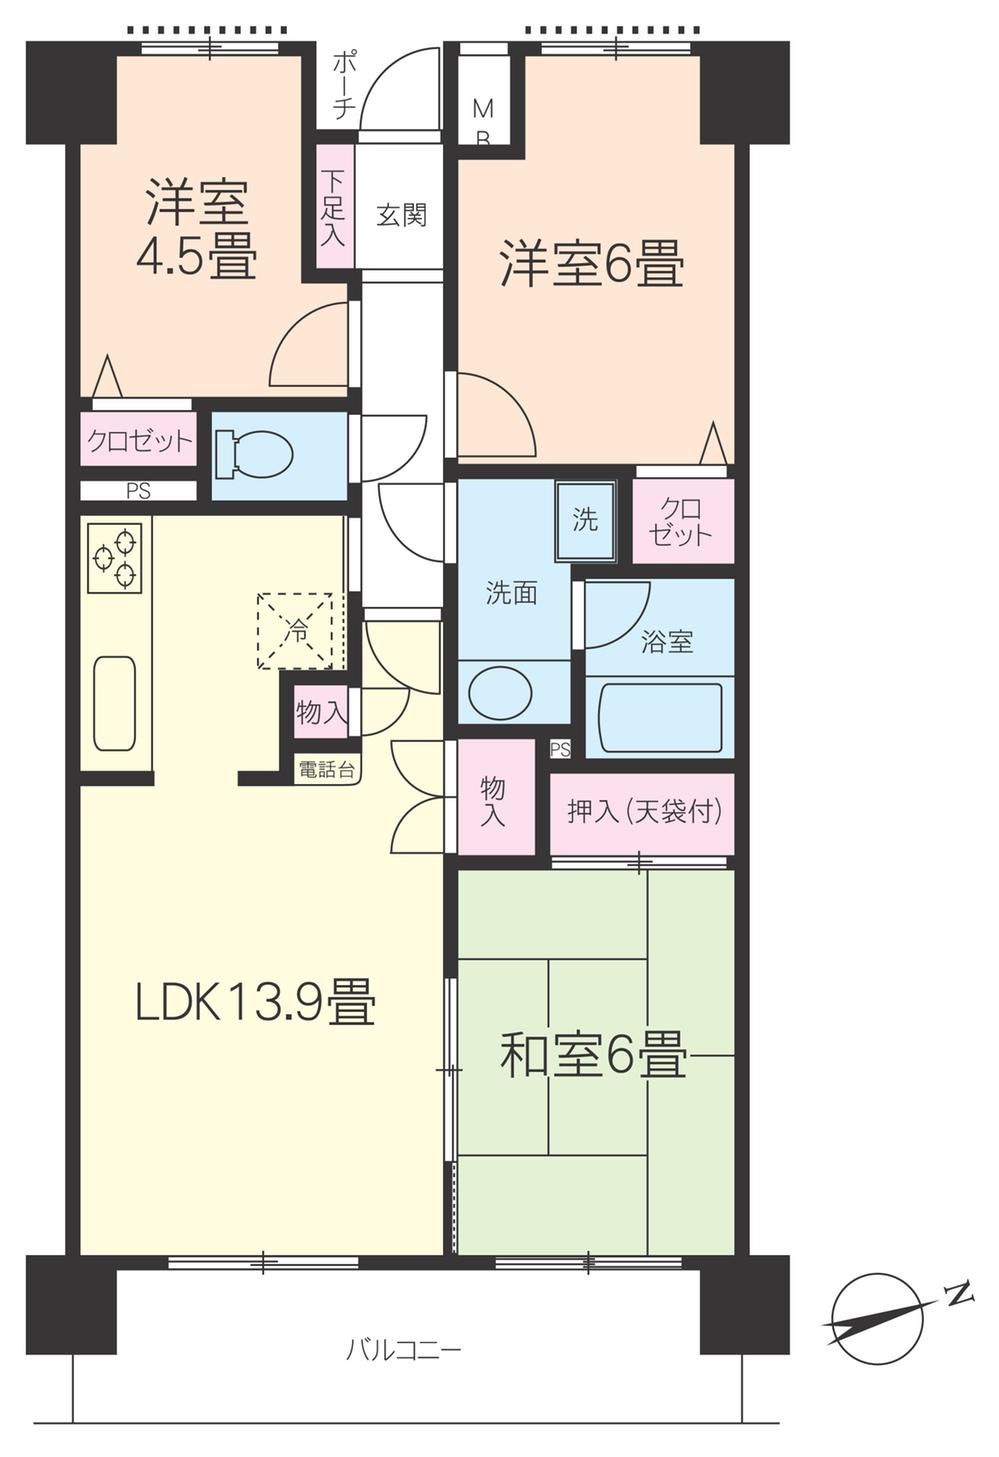 Floor plan. 3LDK, Price 7.8 million yen, Occupied area 67.12 sq m , Balcony area 9.3 sq m